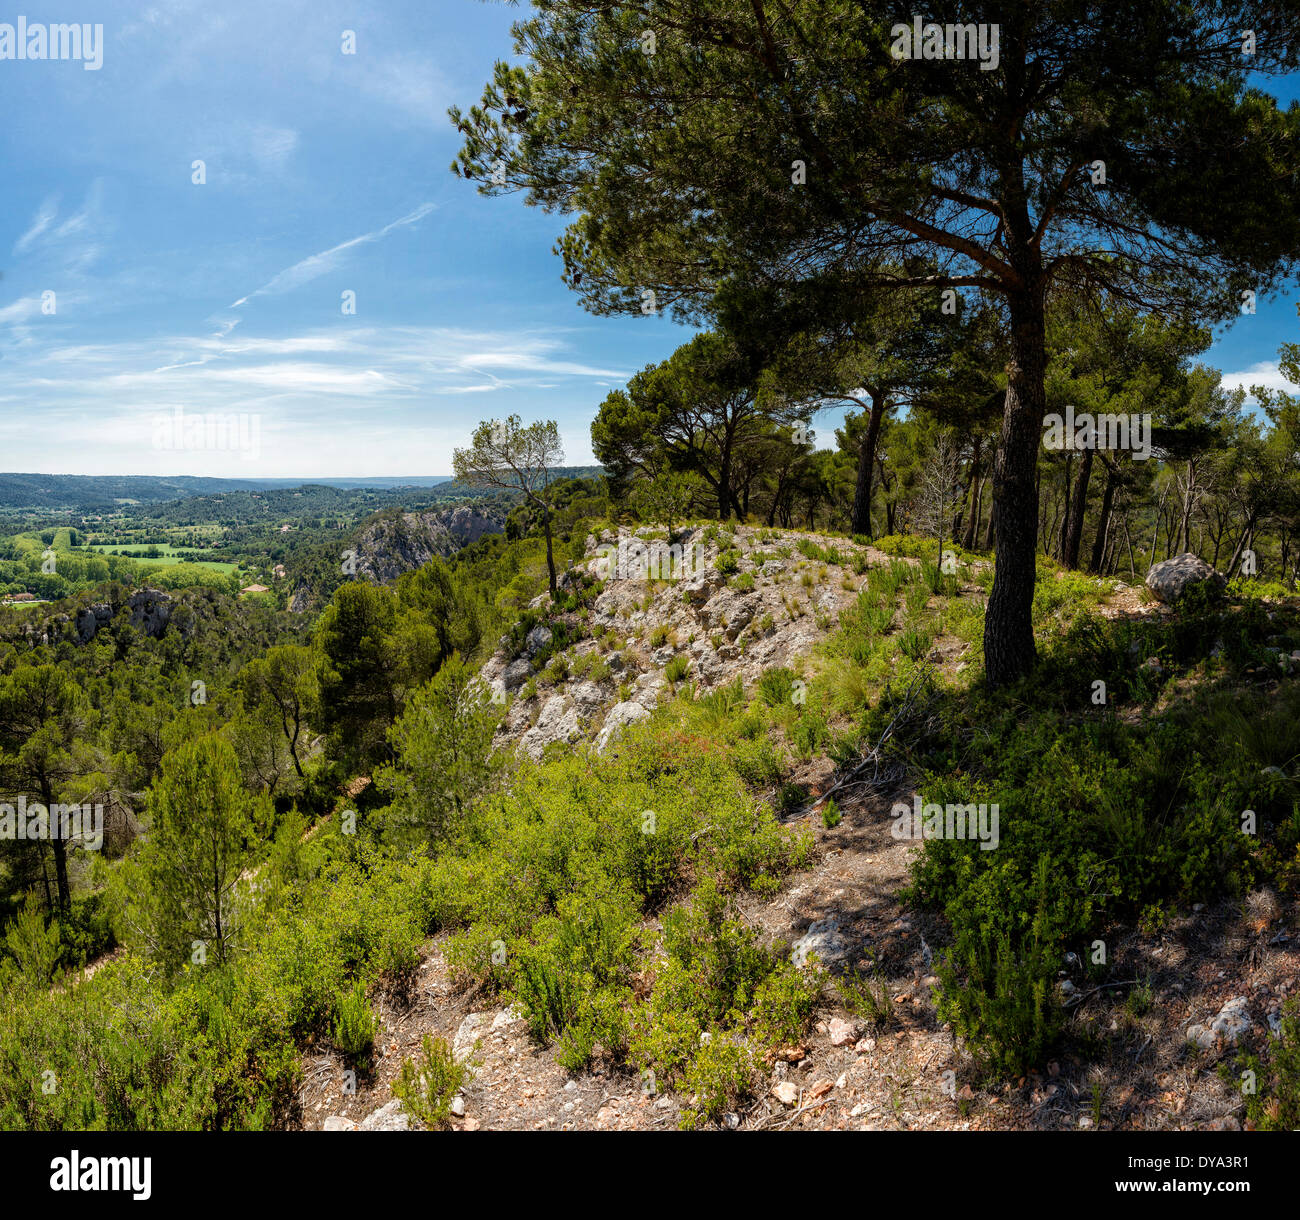 Natur Reservat Sainte Victoire Landschaft Waldholz Bäume Sommer Berge Hügeln Vauvenargues Bouches du Rhone Frankreich Europa Stockfoto